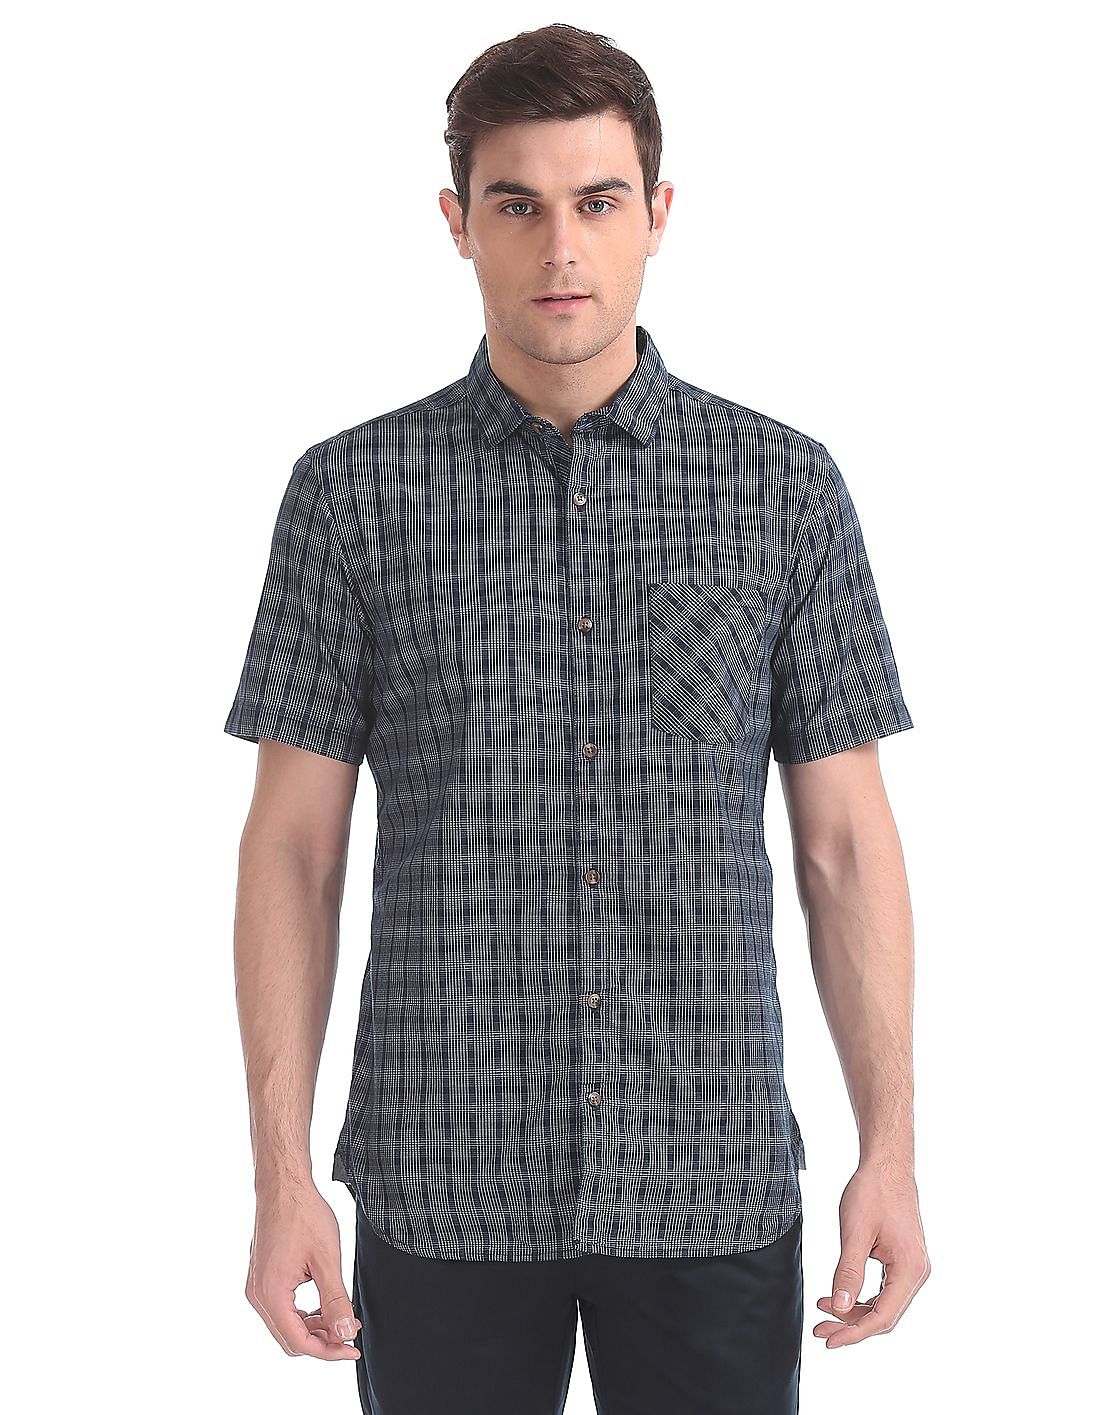 Buy Men Short Sleeve Check Shirt online at NNNOW.com